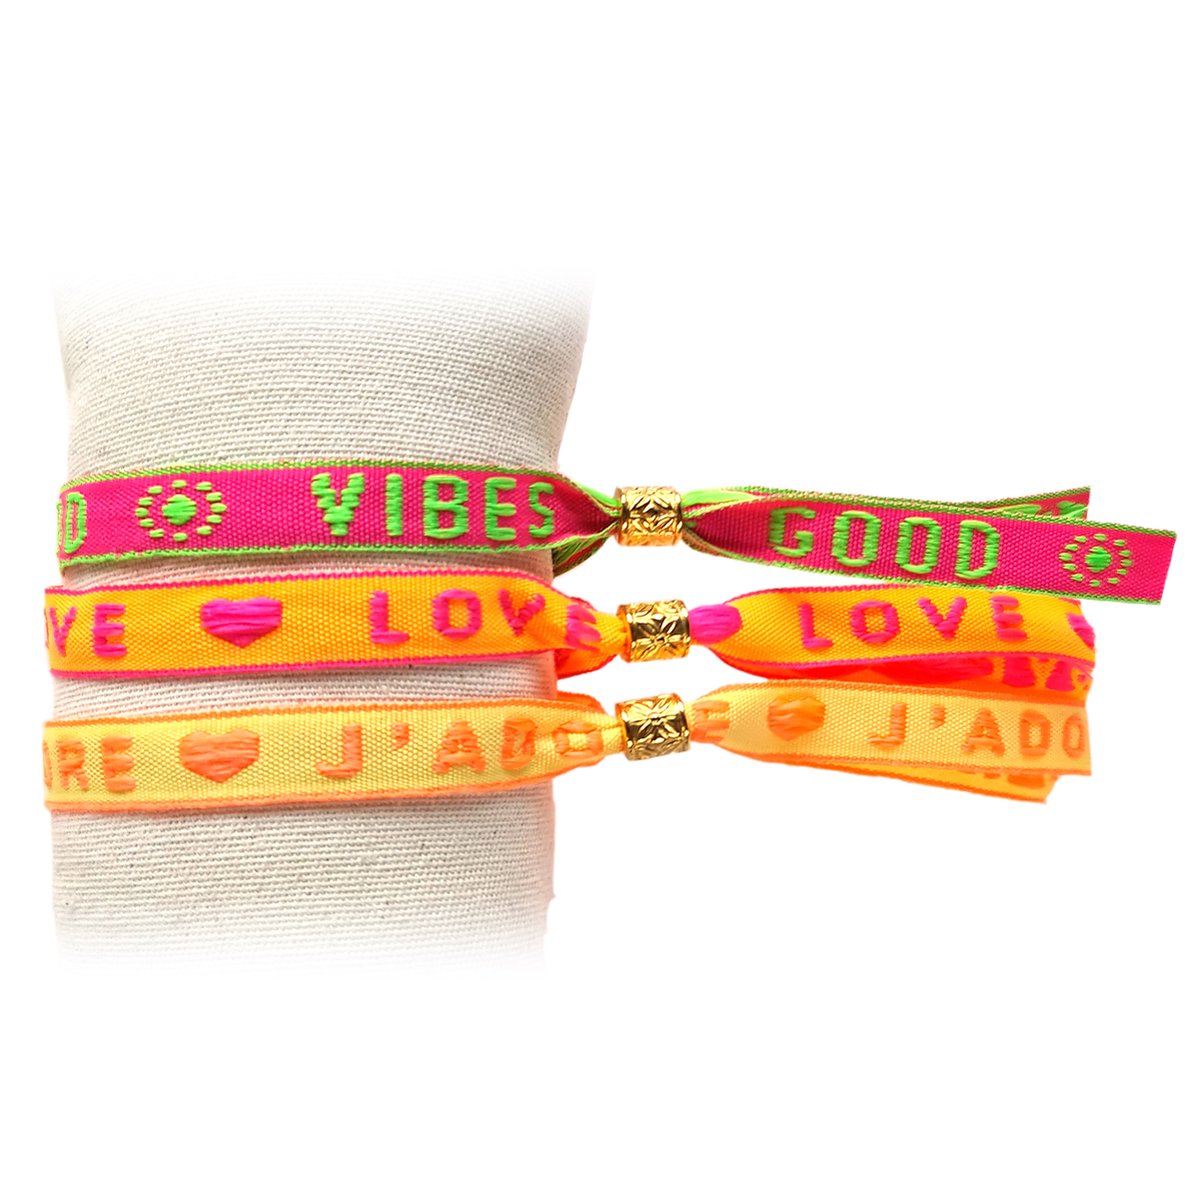 Principessa set van 3 trendy Festival lint armbandjes met tekstlint - Tekst: Good Vibes, Love, J’adore - Kleur: Neon Roze, Oranje, Geel